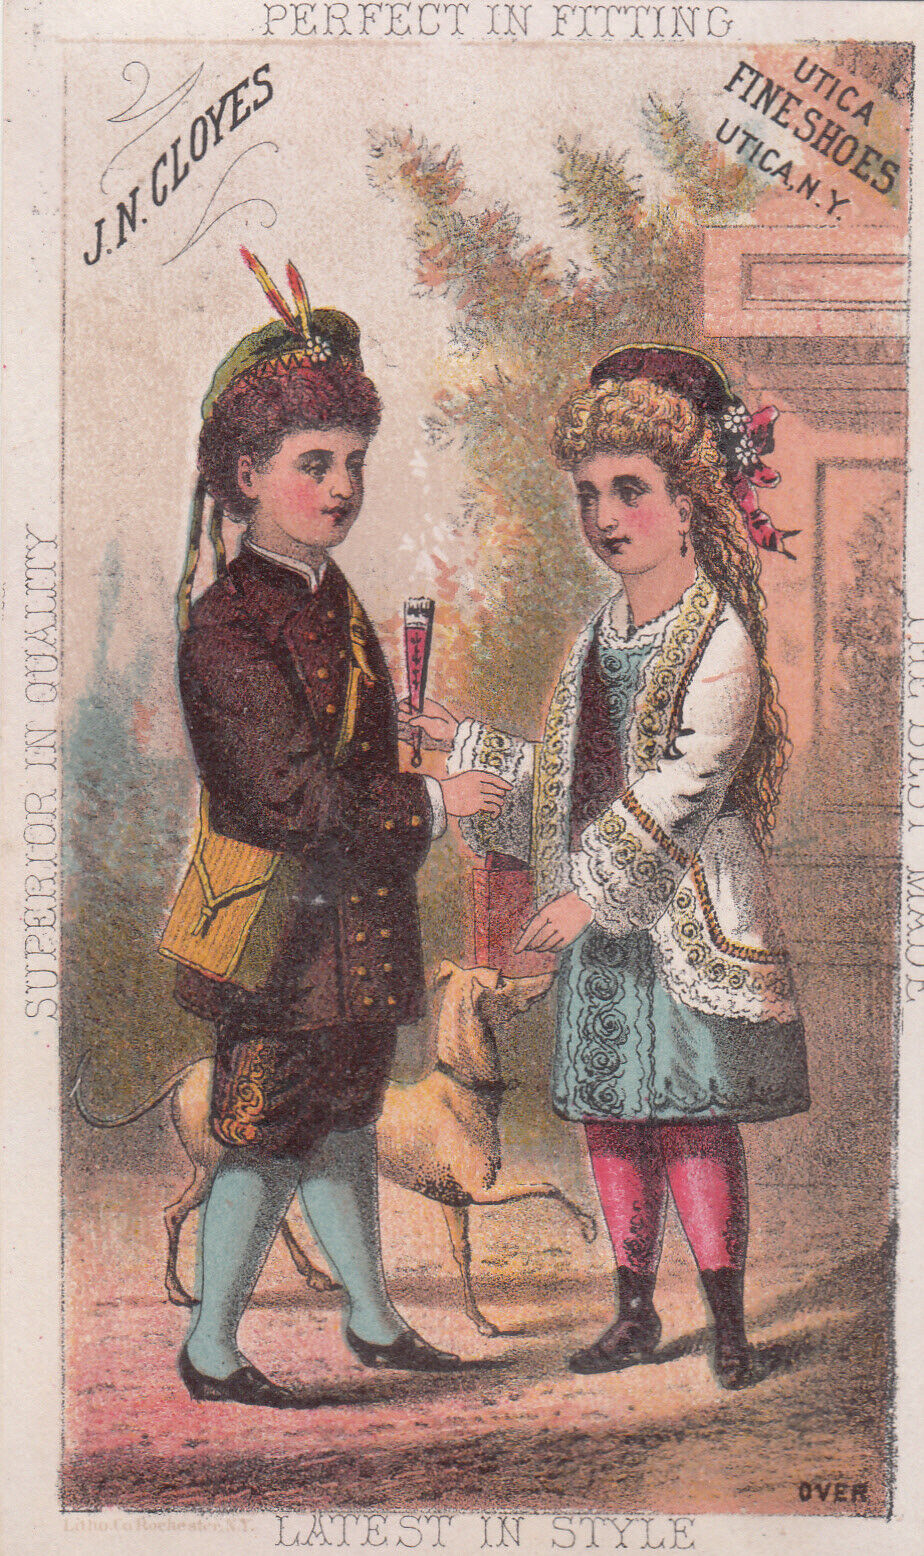 J N Cloyes Utica Shoes Boy & Girl Dog K Pancoast Philadelphia Vict Card c1880s